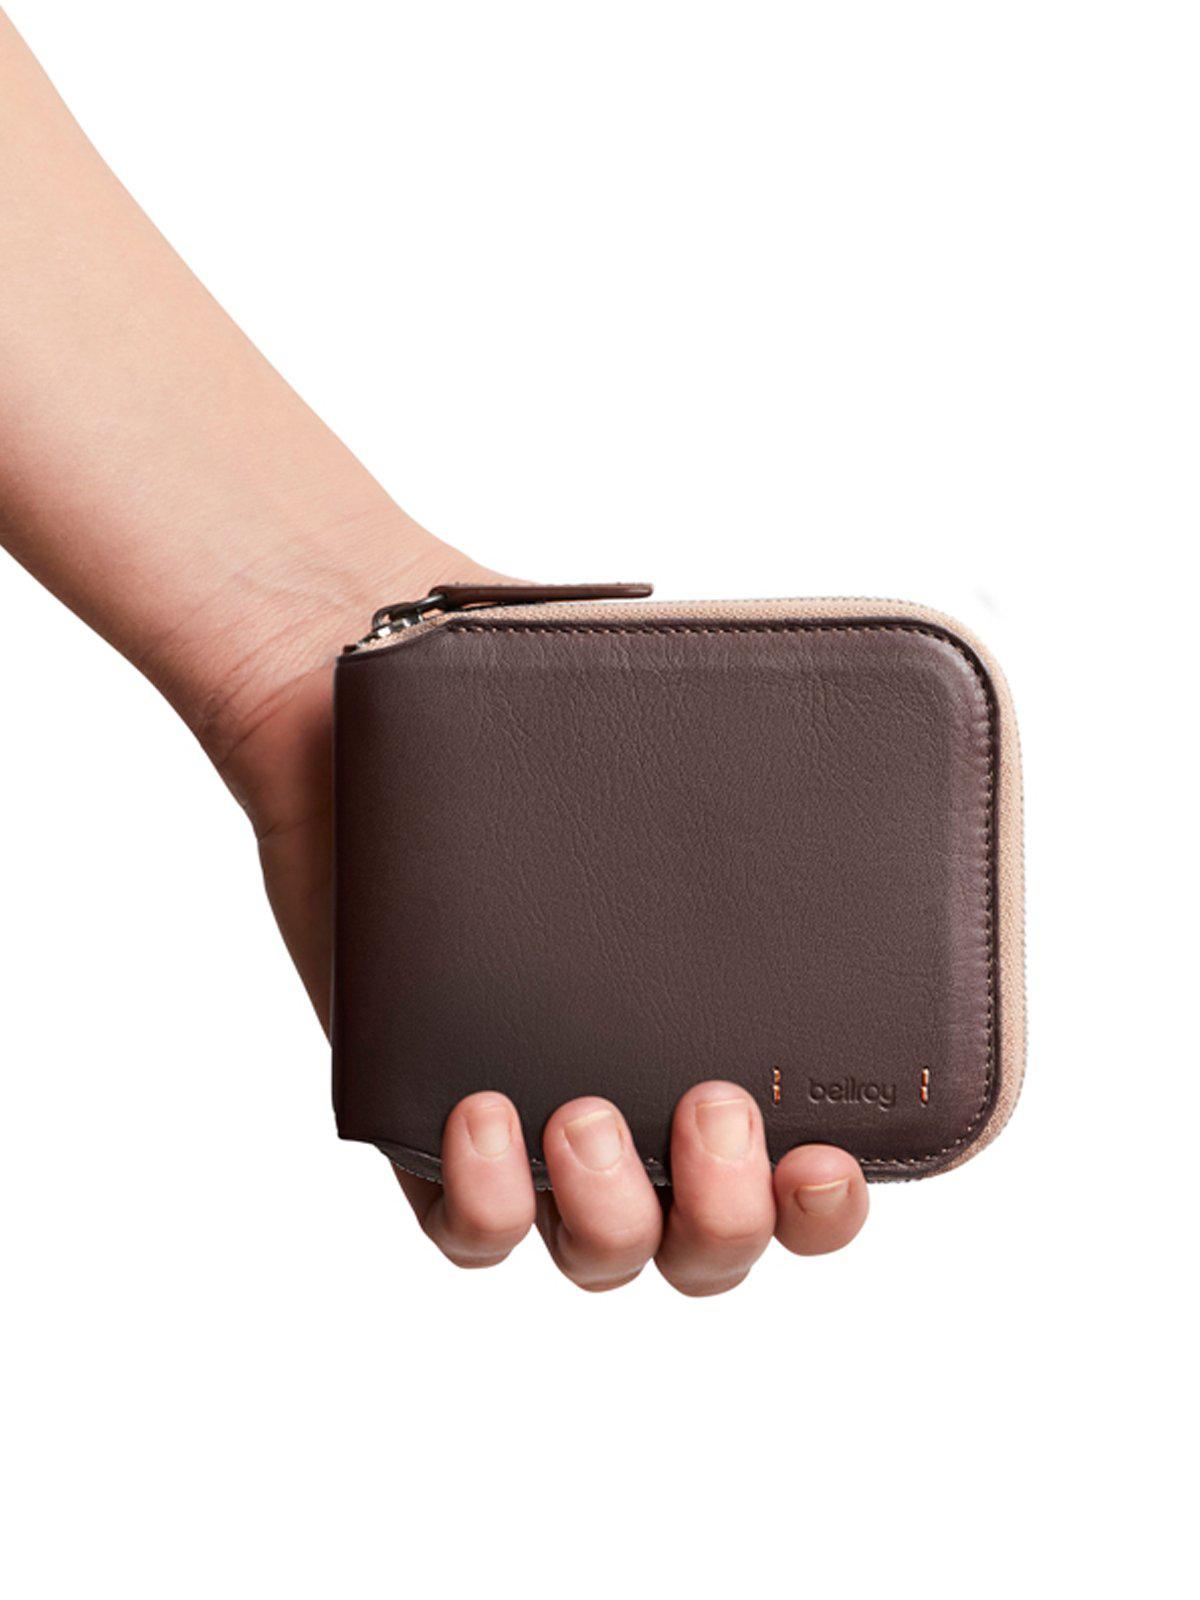 Bellroy Zip Wallet Premium Edition Aragon RFID